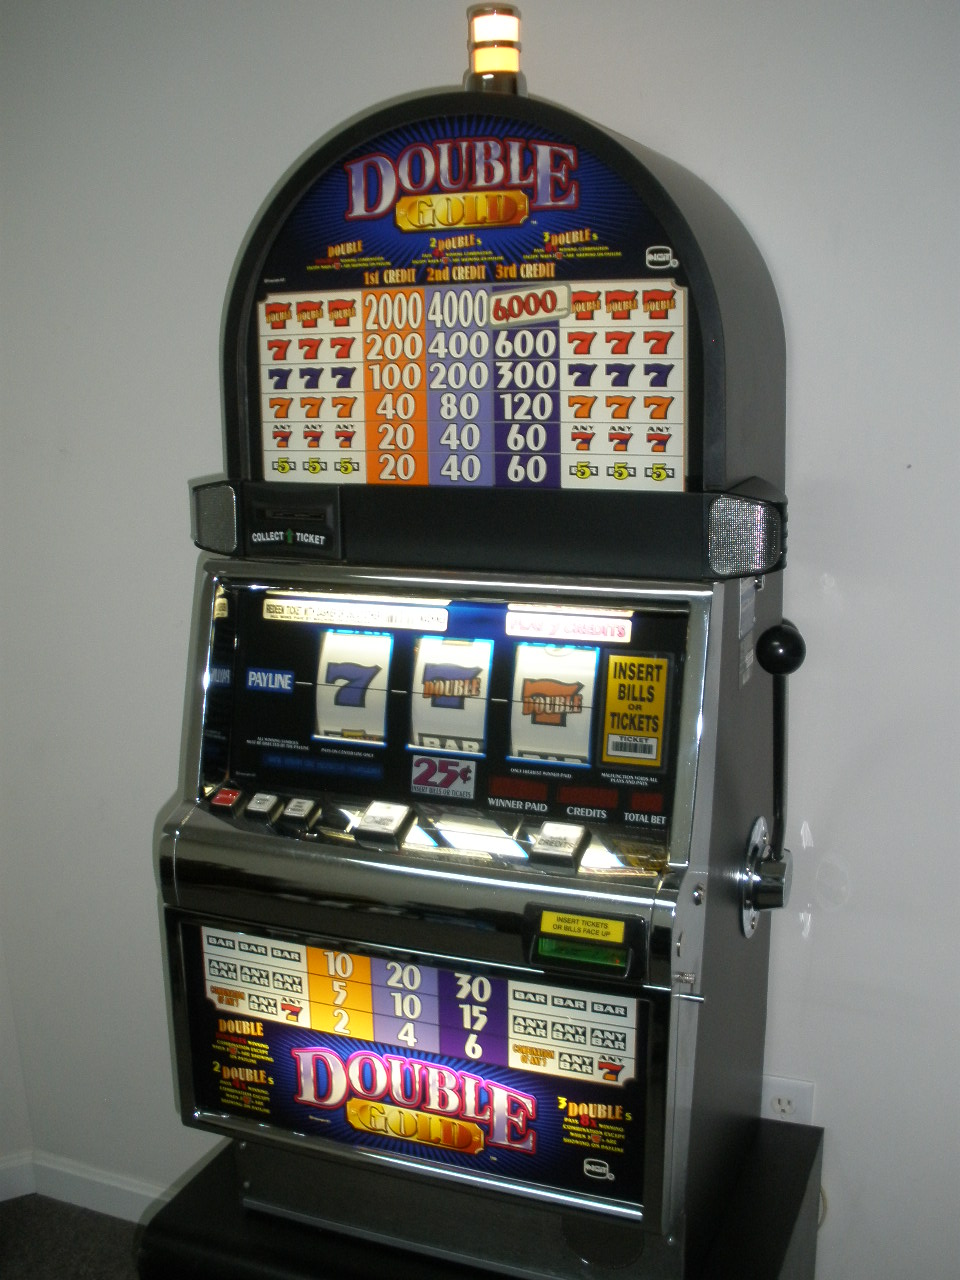 Double gold slot machine payouts